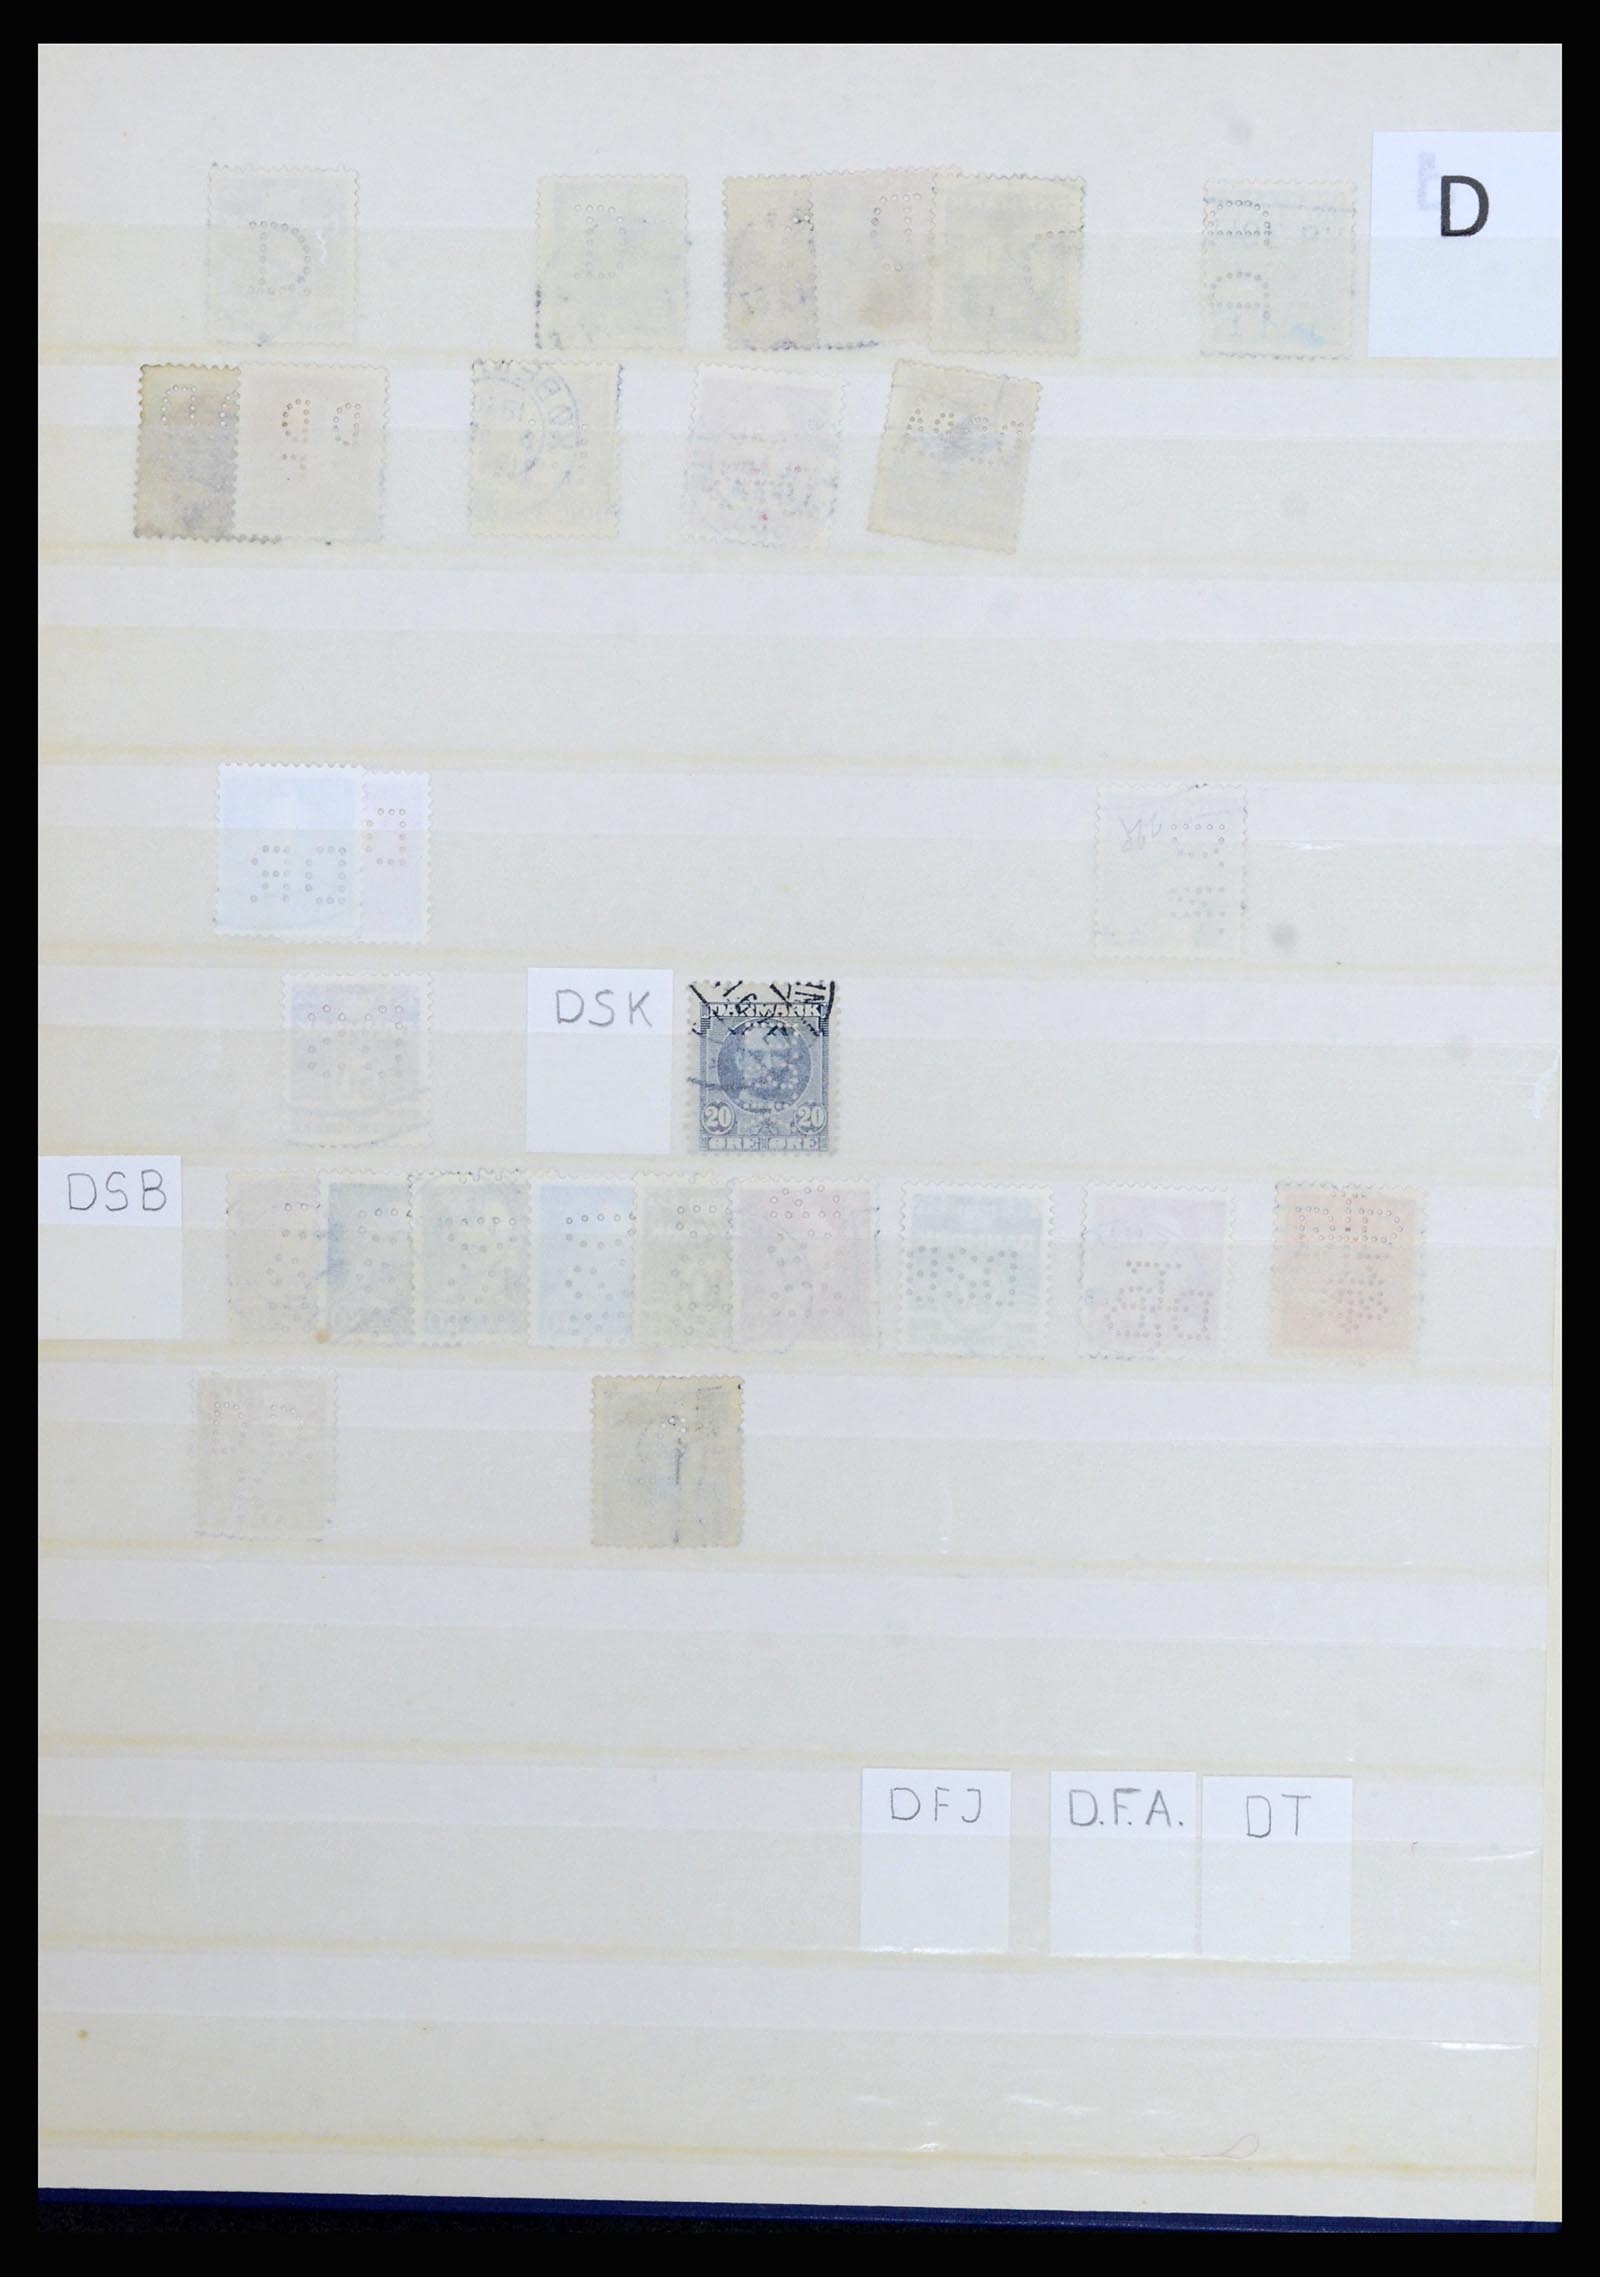 37056 045 - Stamp collection 37056 Denmark perfins.